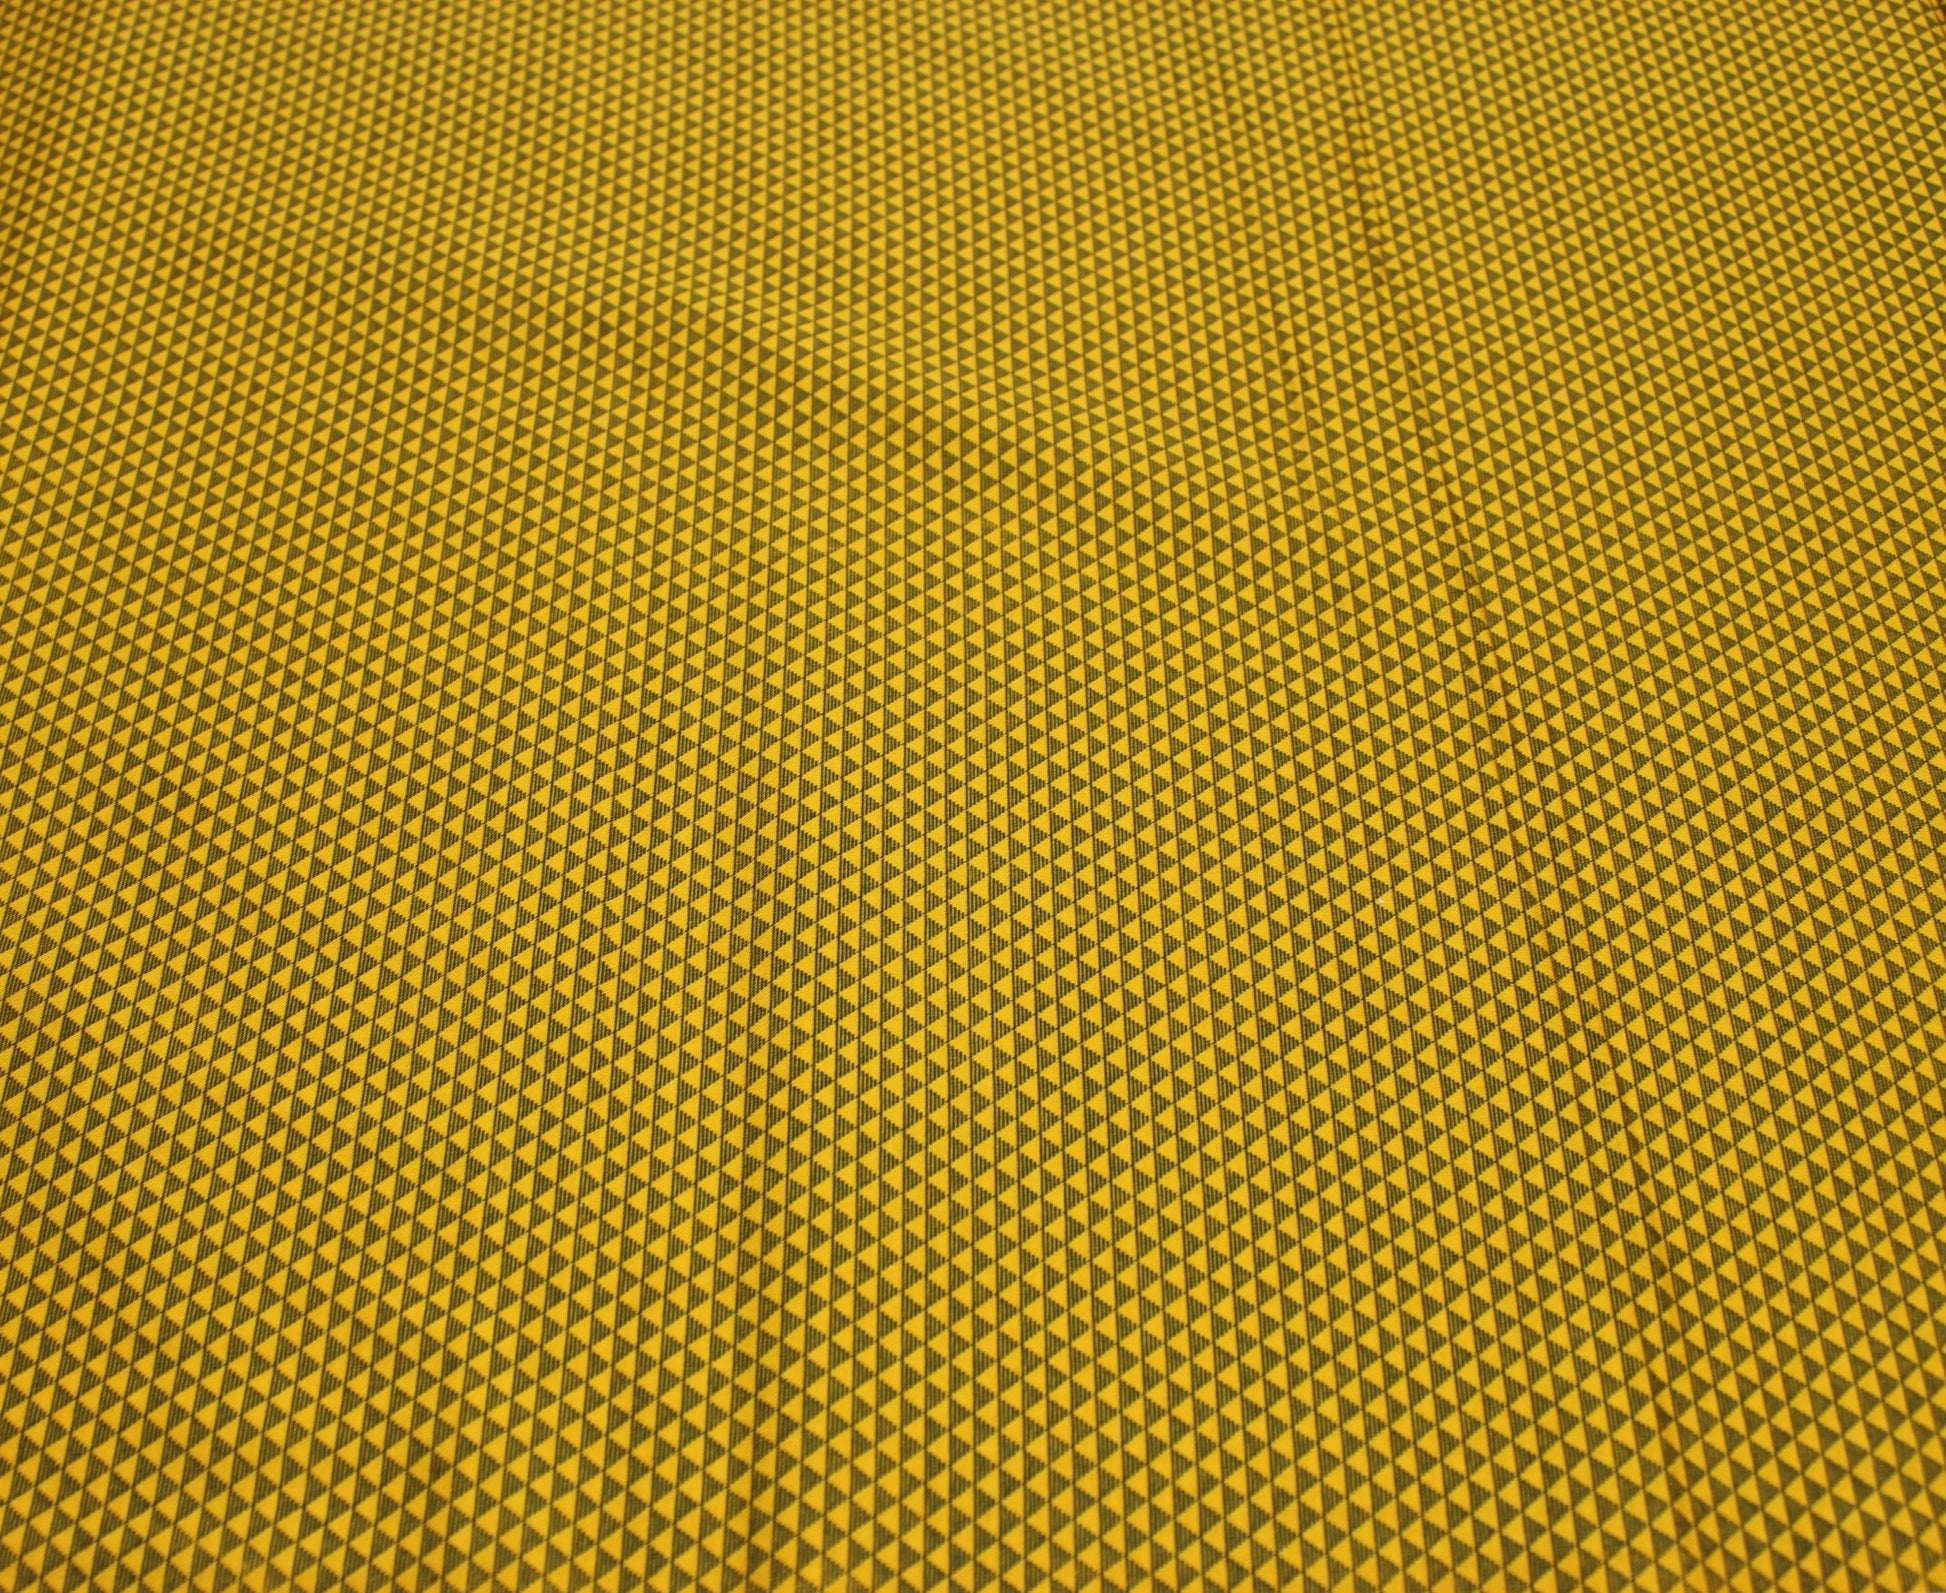 mini chevrons in yellow and black fabric